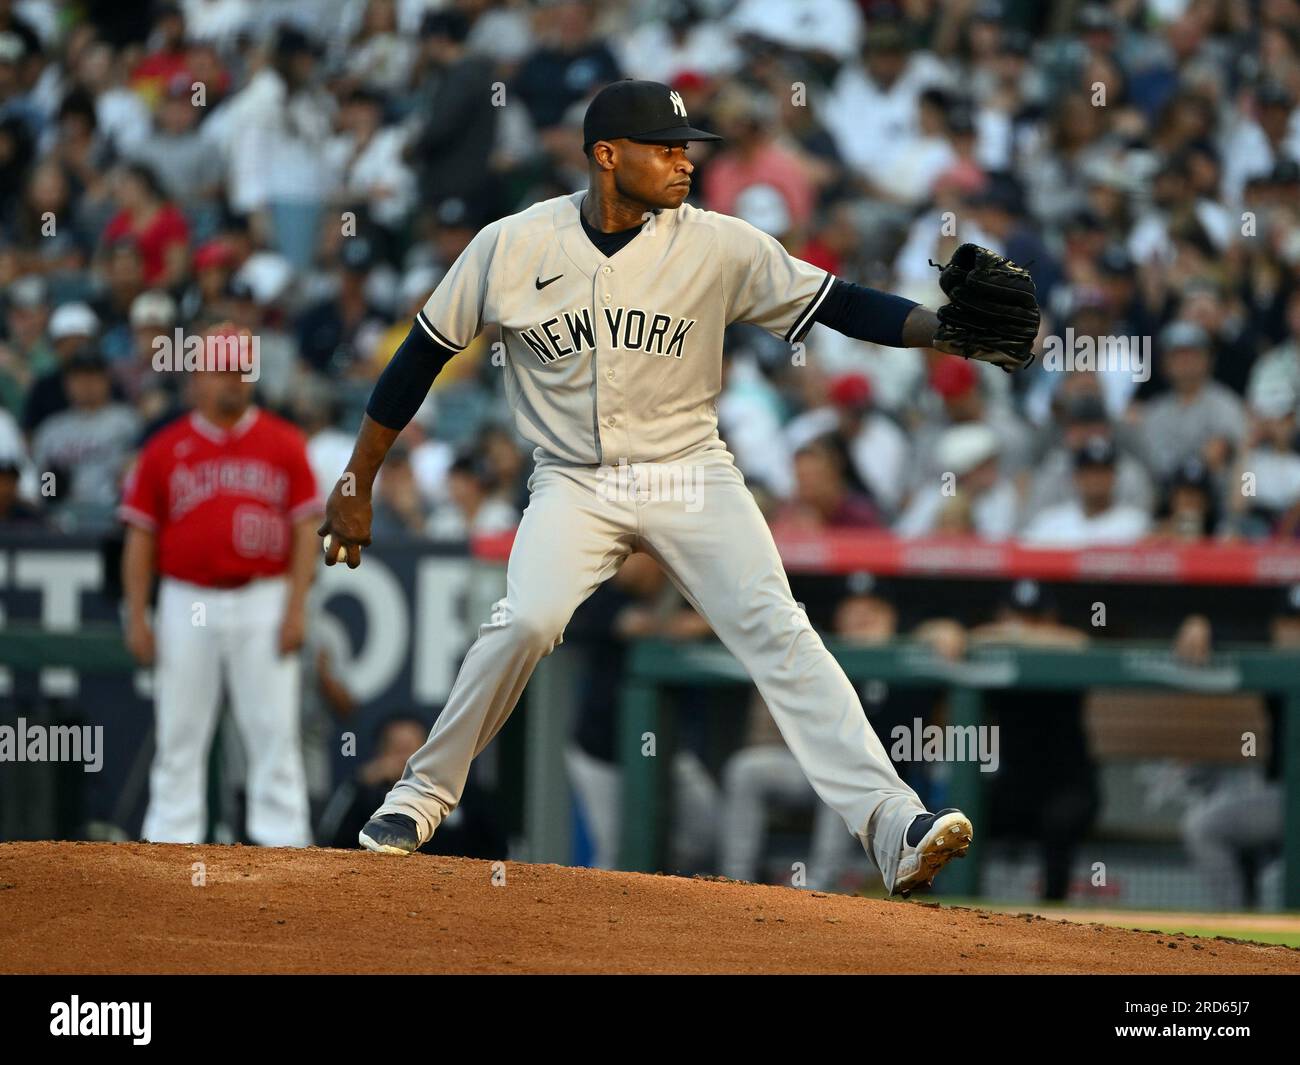 ANAHEIM, CA - JULY 18: New York Yankees pitcher Domingo German (0